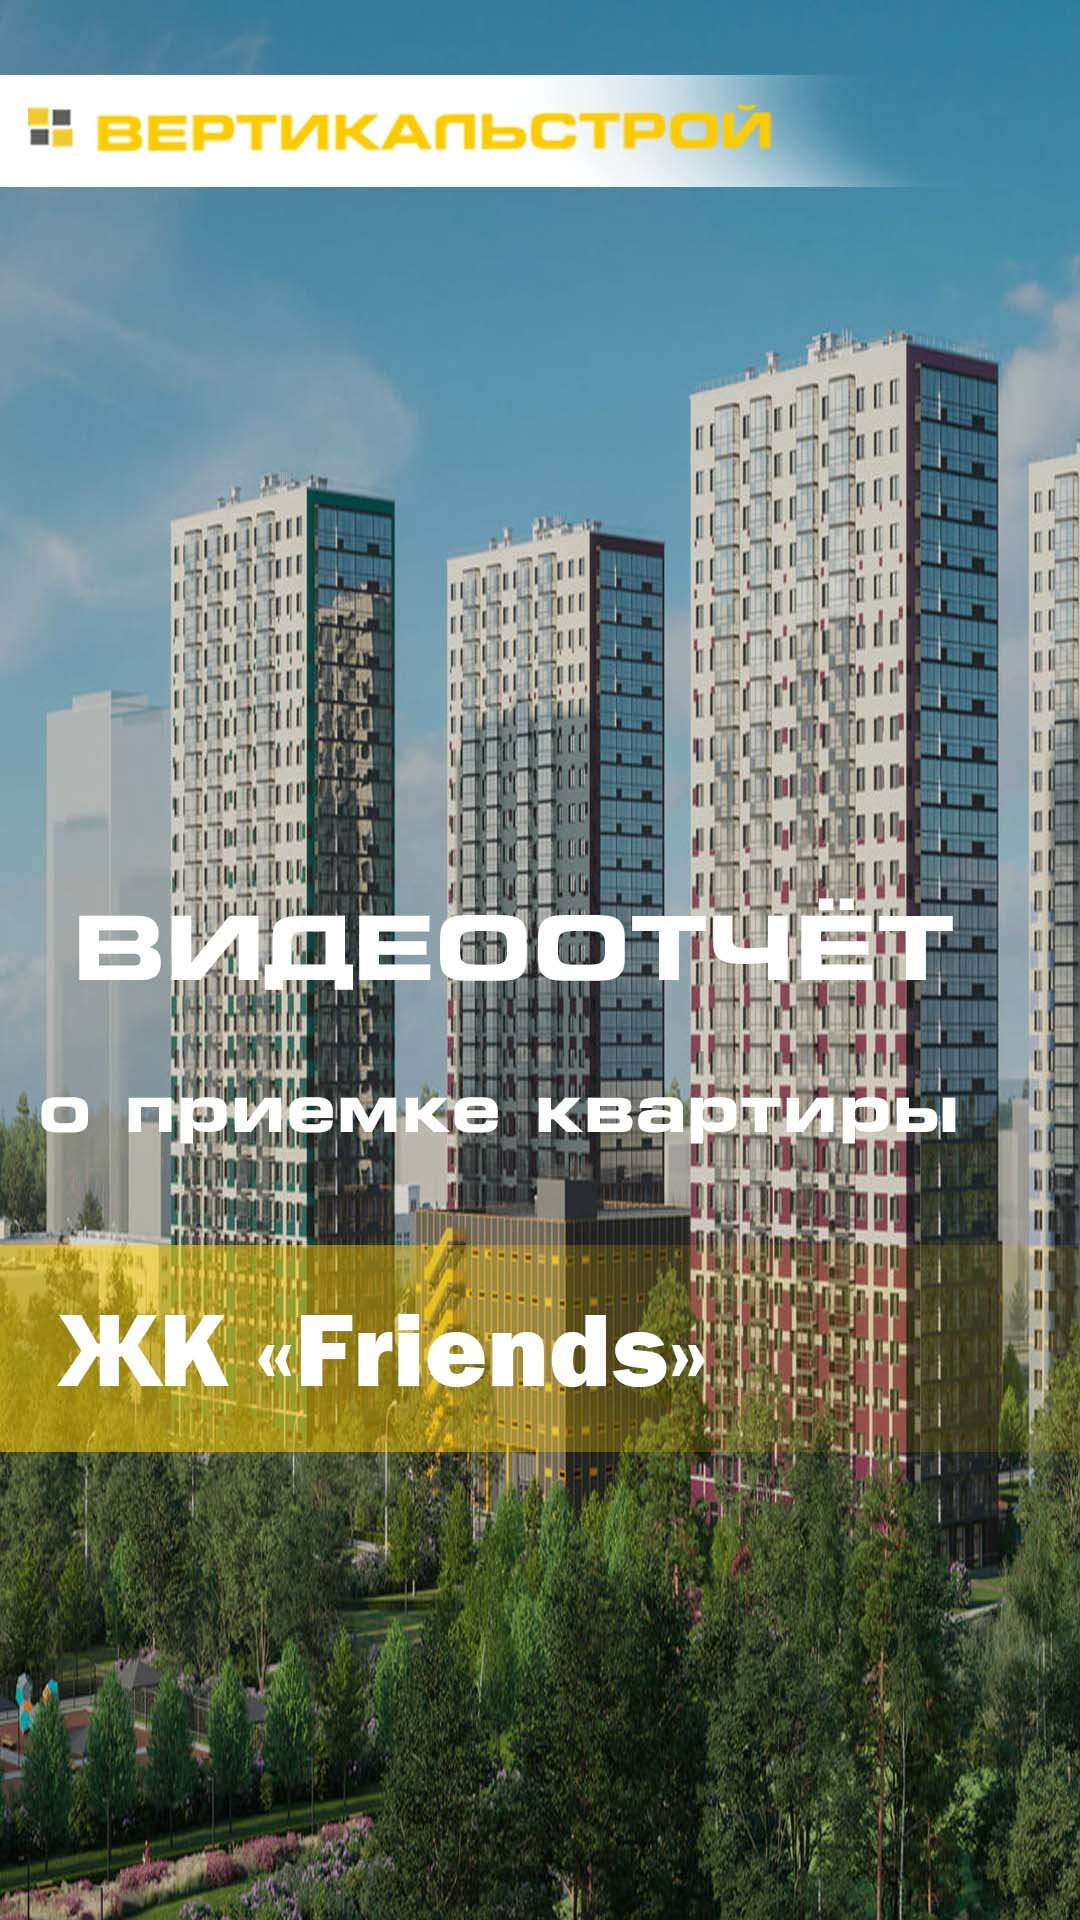 Friends от ПСК - Приёмка квартиры от ВЕРТИКАЛЬСТРОЙ